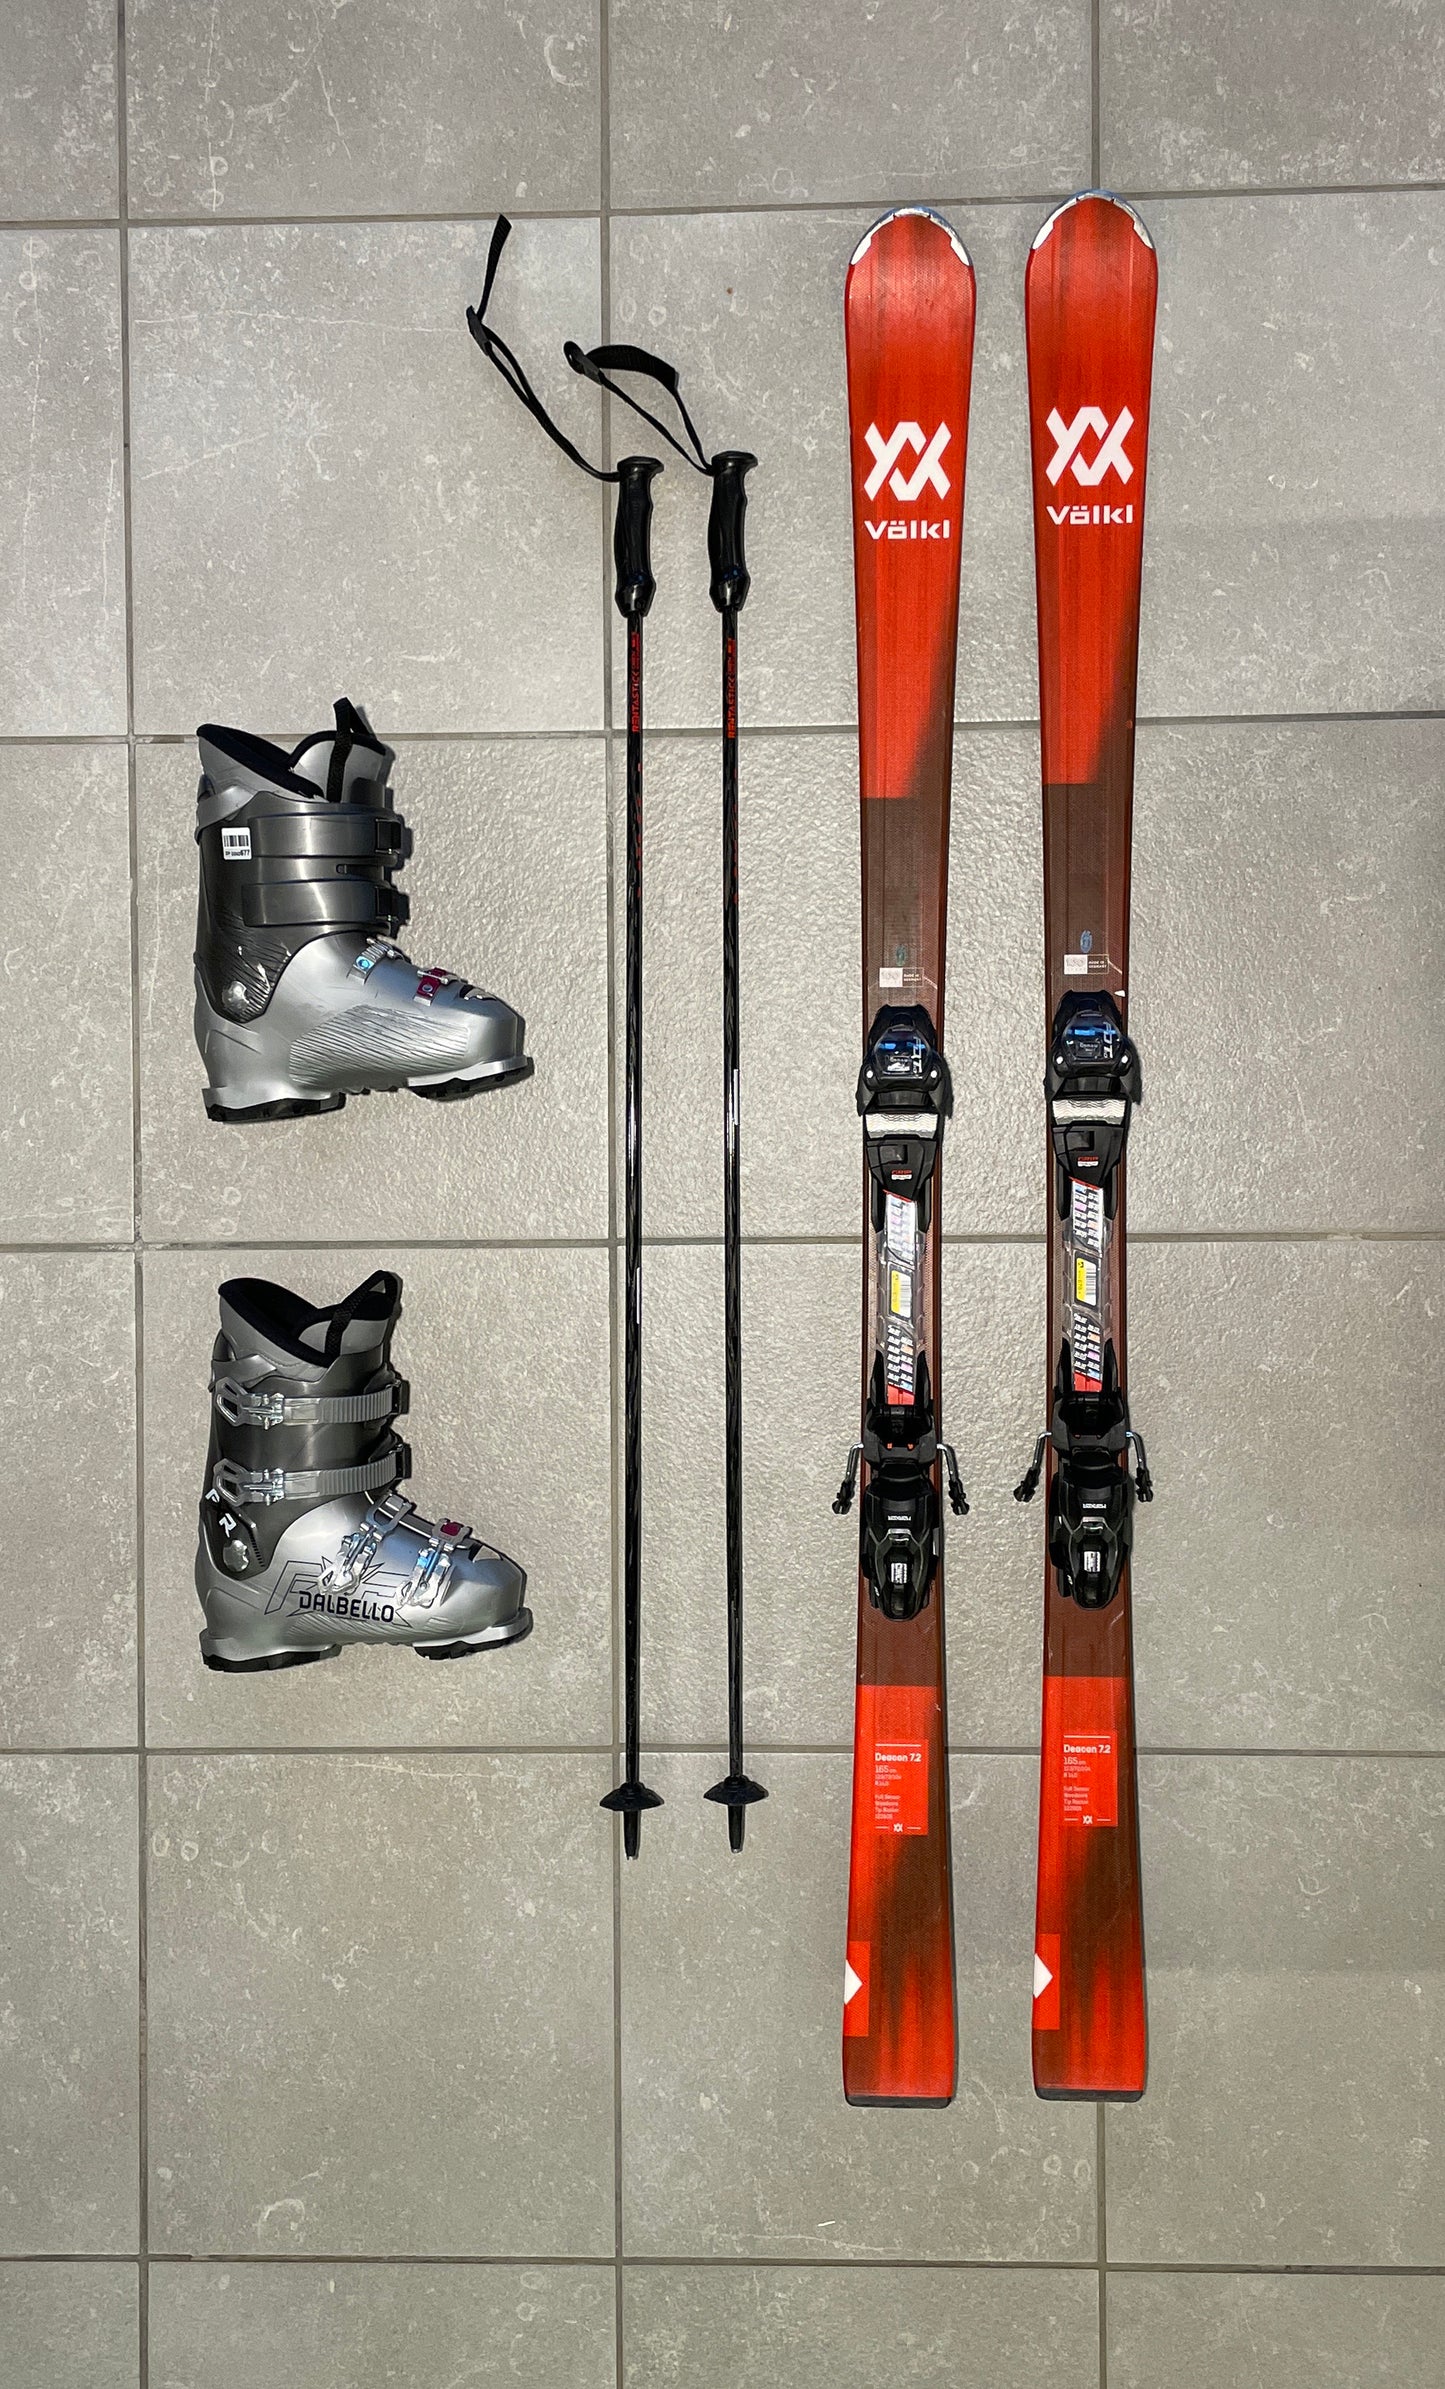 Ski rental set